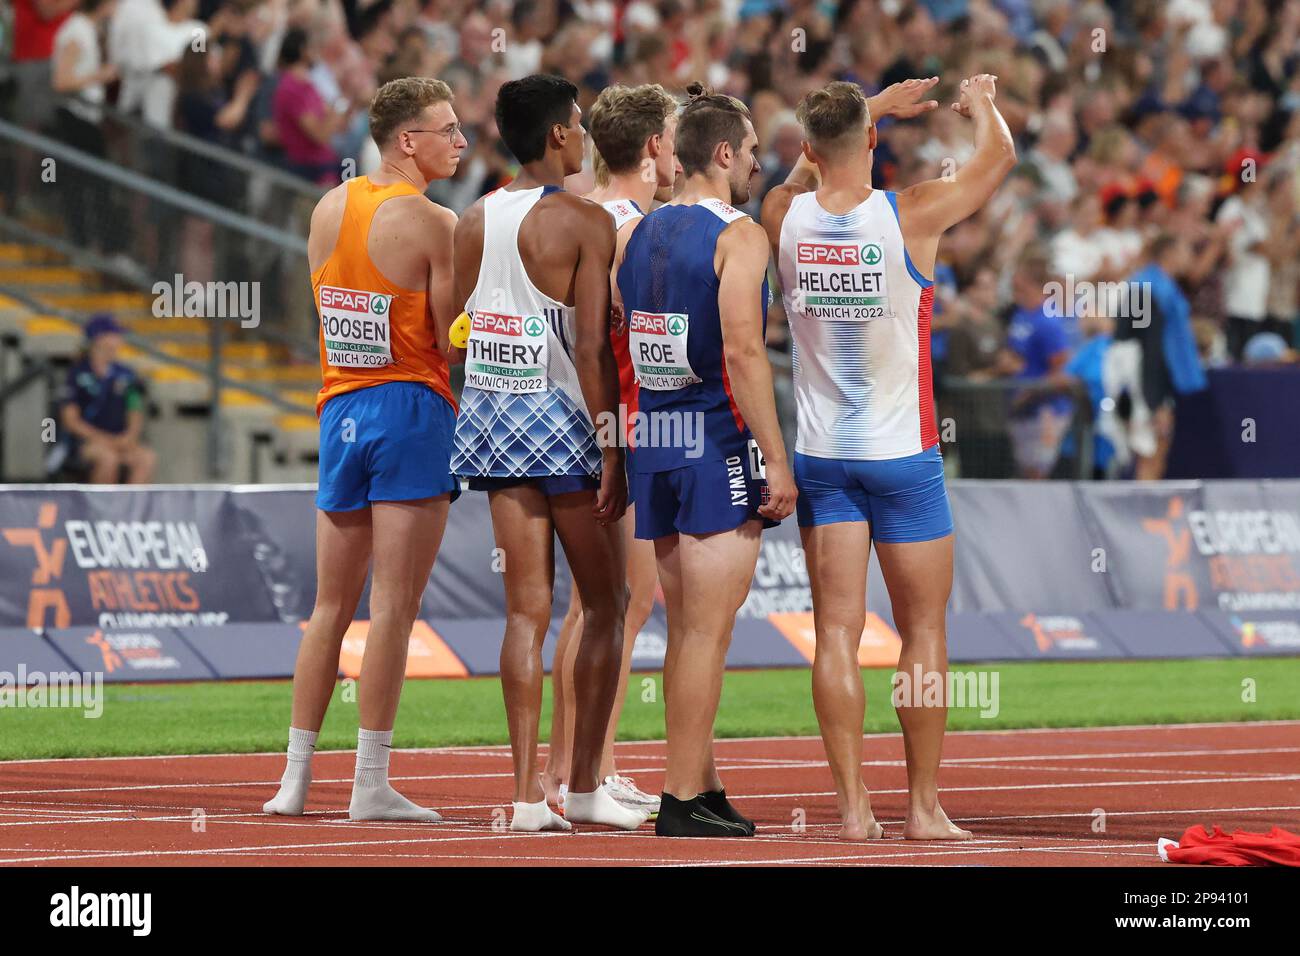 Martin ROE, Adam Sebastian HELCELET, Baptiste THIERY & Sven ROOSEN looking into the crowd at the European Athletics Championship 2022 Stock Photo